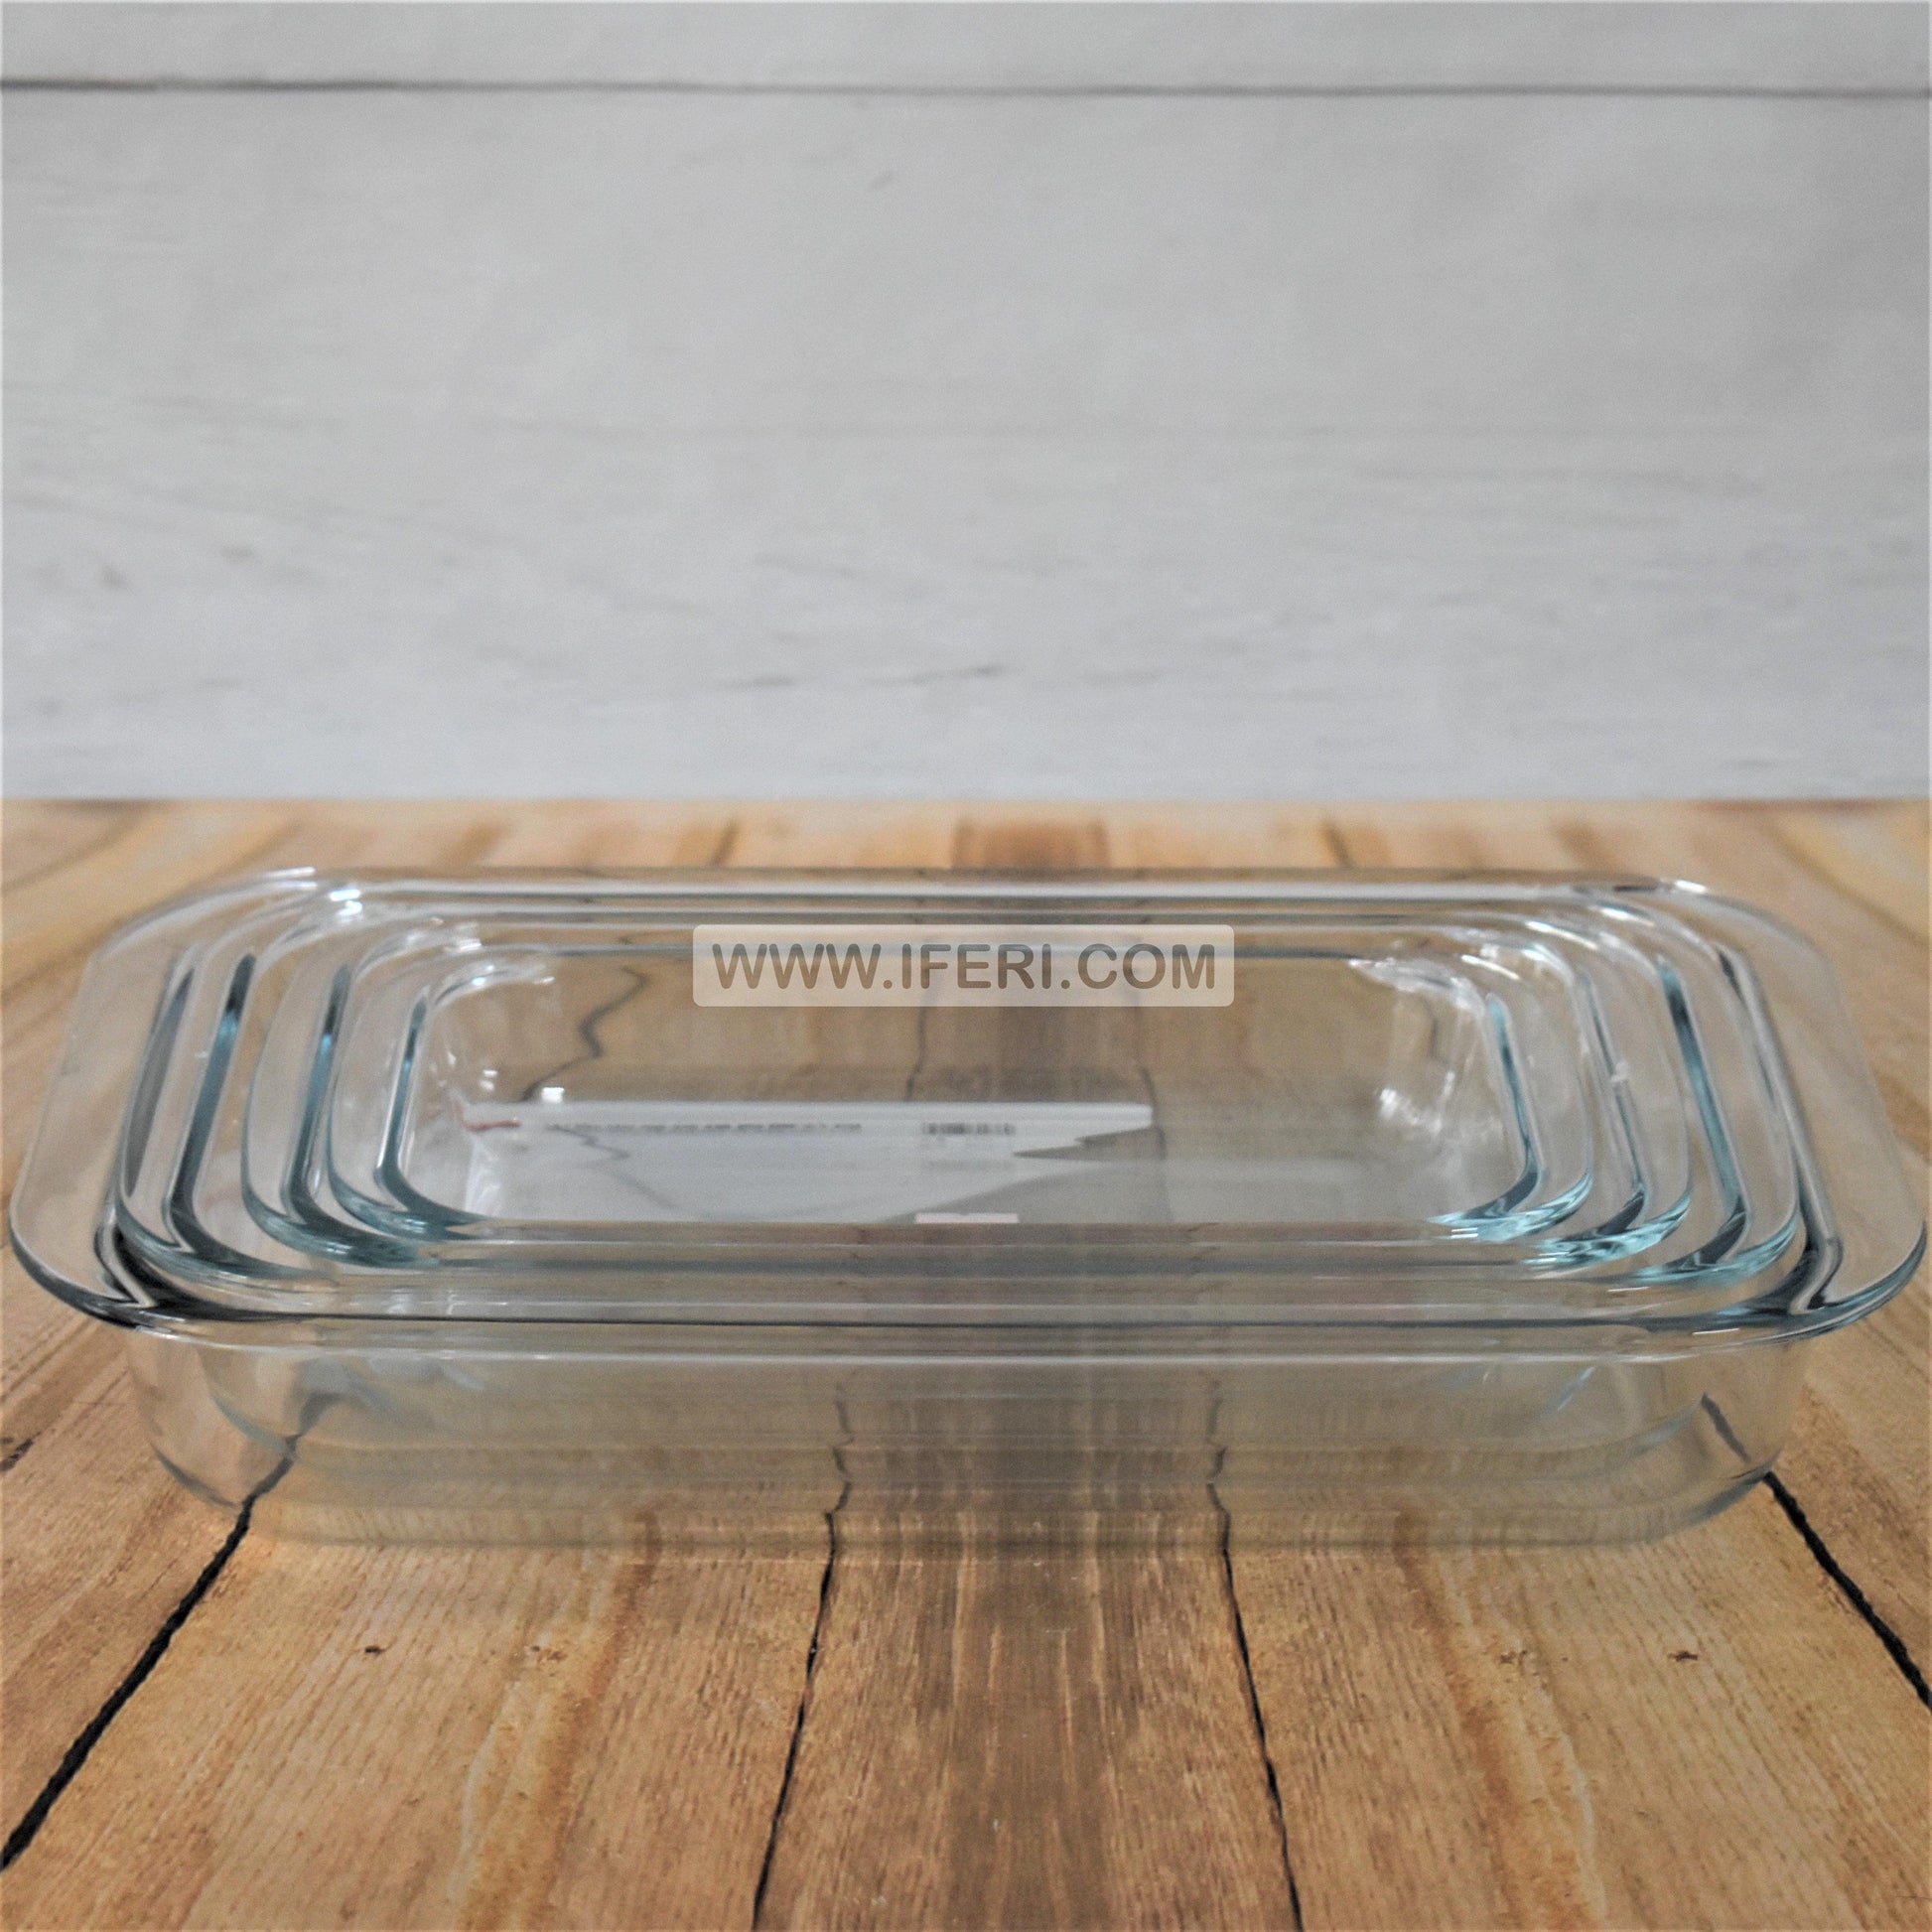 4 Piece Tempered Glass Rectangular Casserole Set UT7532 - Price in BD at iferi.com